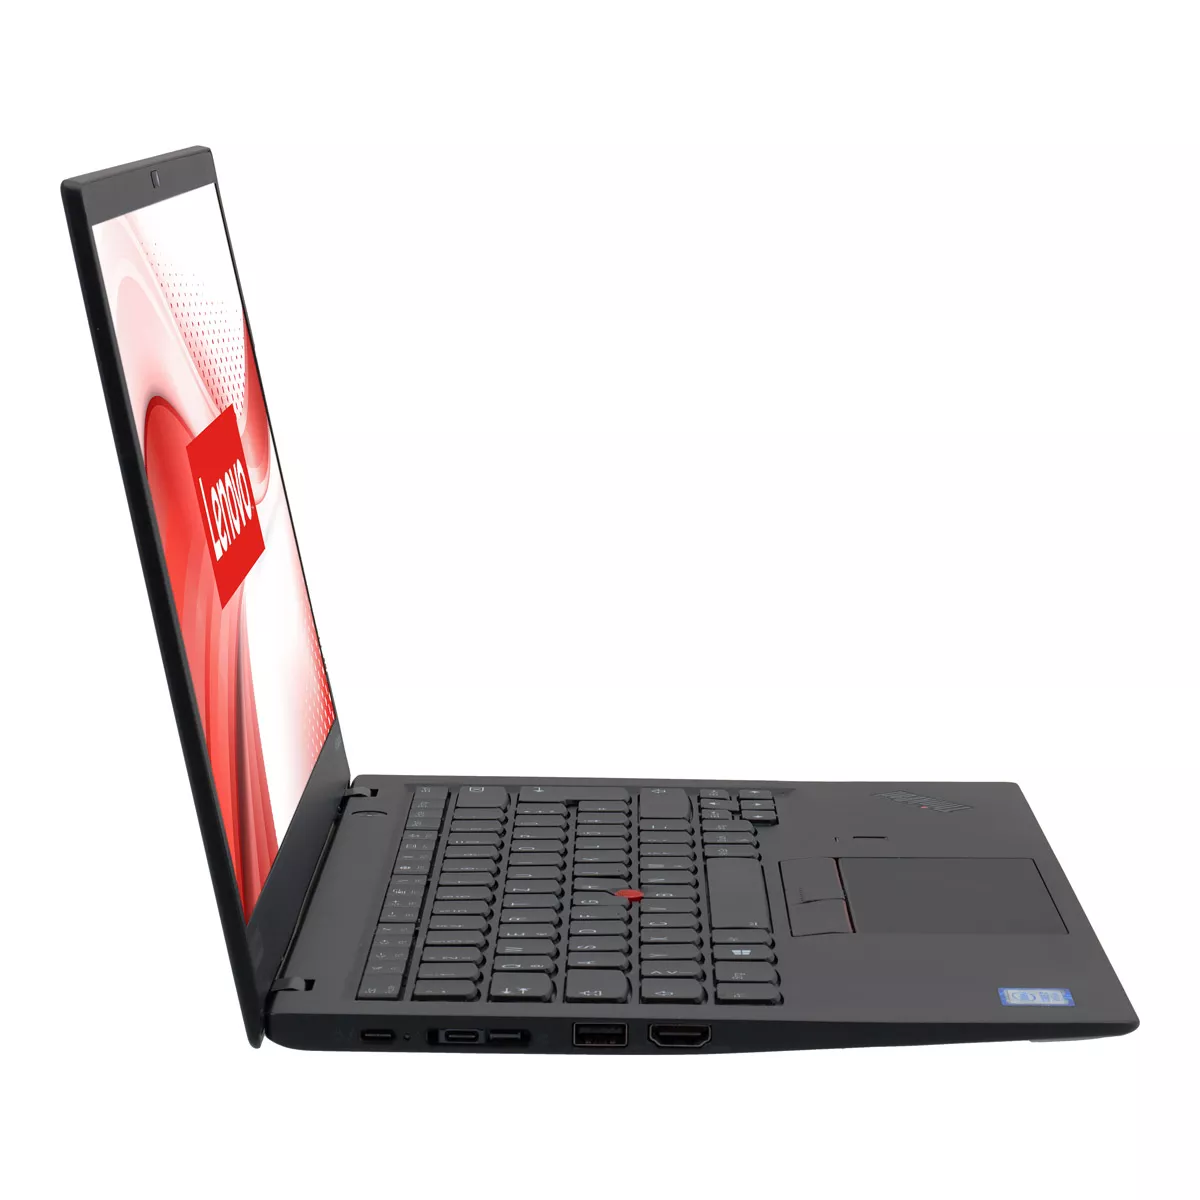 Lenovo ThinkPad X1 Carbon G7 Core i7 8565U Full-HD 16 GB 500 GB M.2 nVME SSD LTE Webcam B